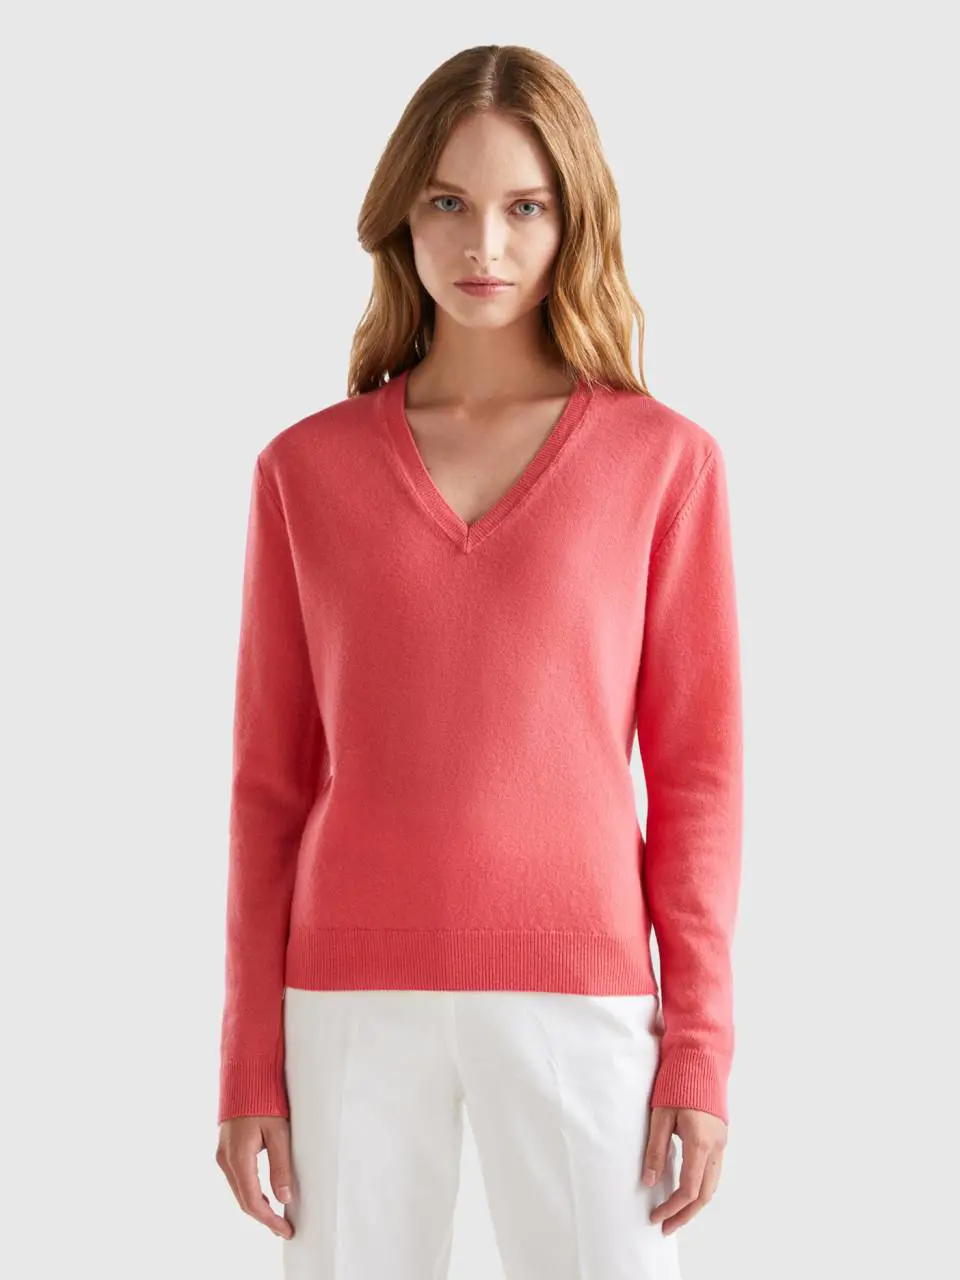 Benetton strawberry red v-neck sweater in pure merino wool. 1